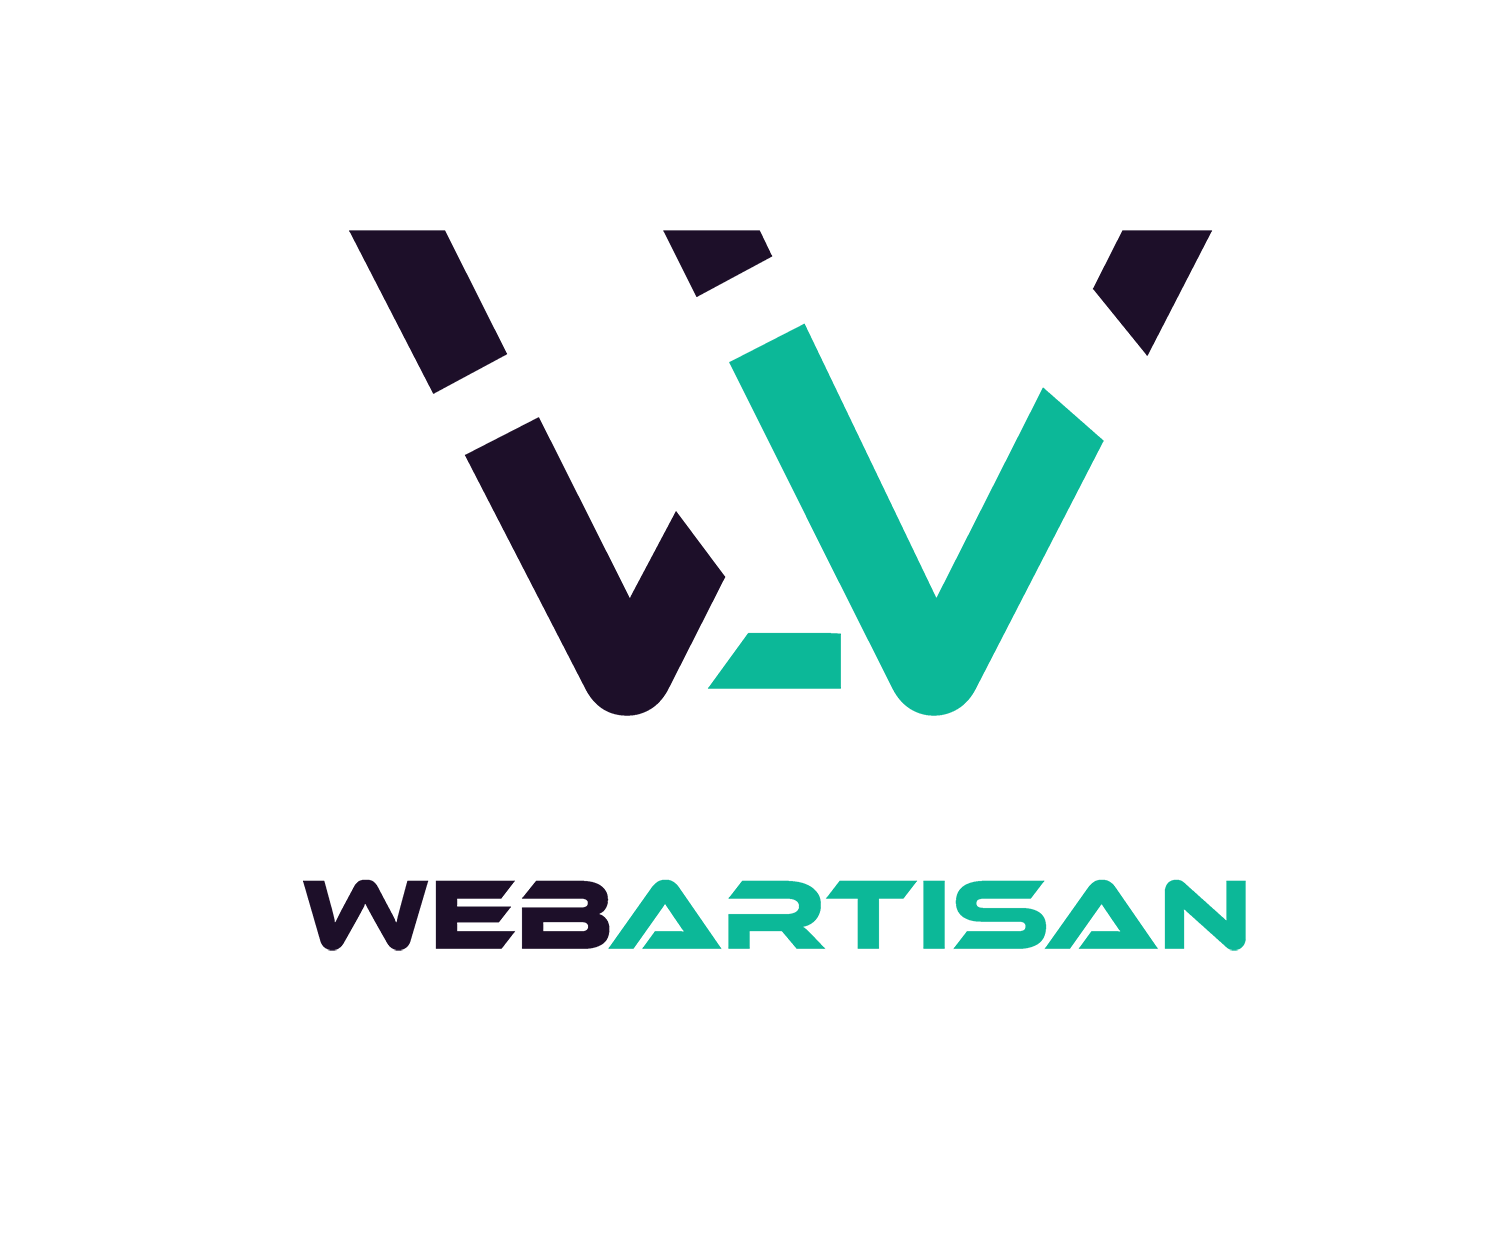 Unigraphics Logo - Modern, Professional, Digital Logo Design for WebArtisan by Dinov ...